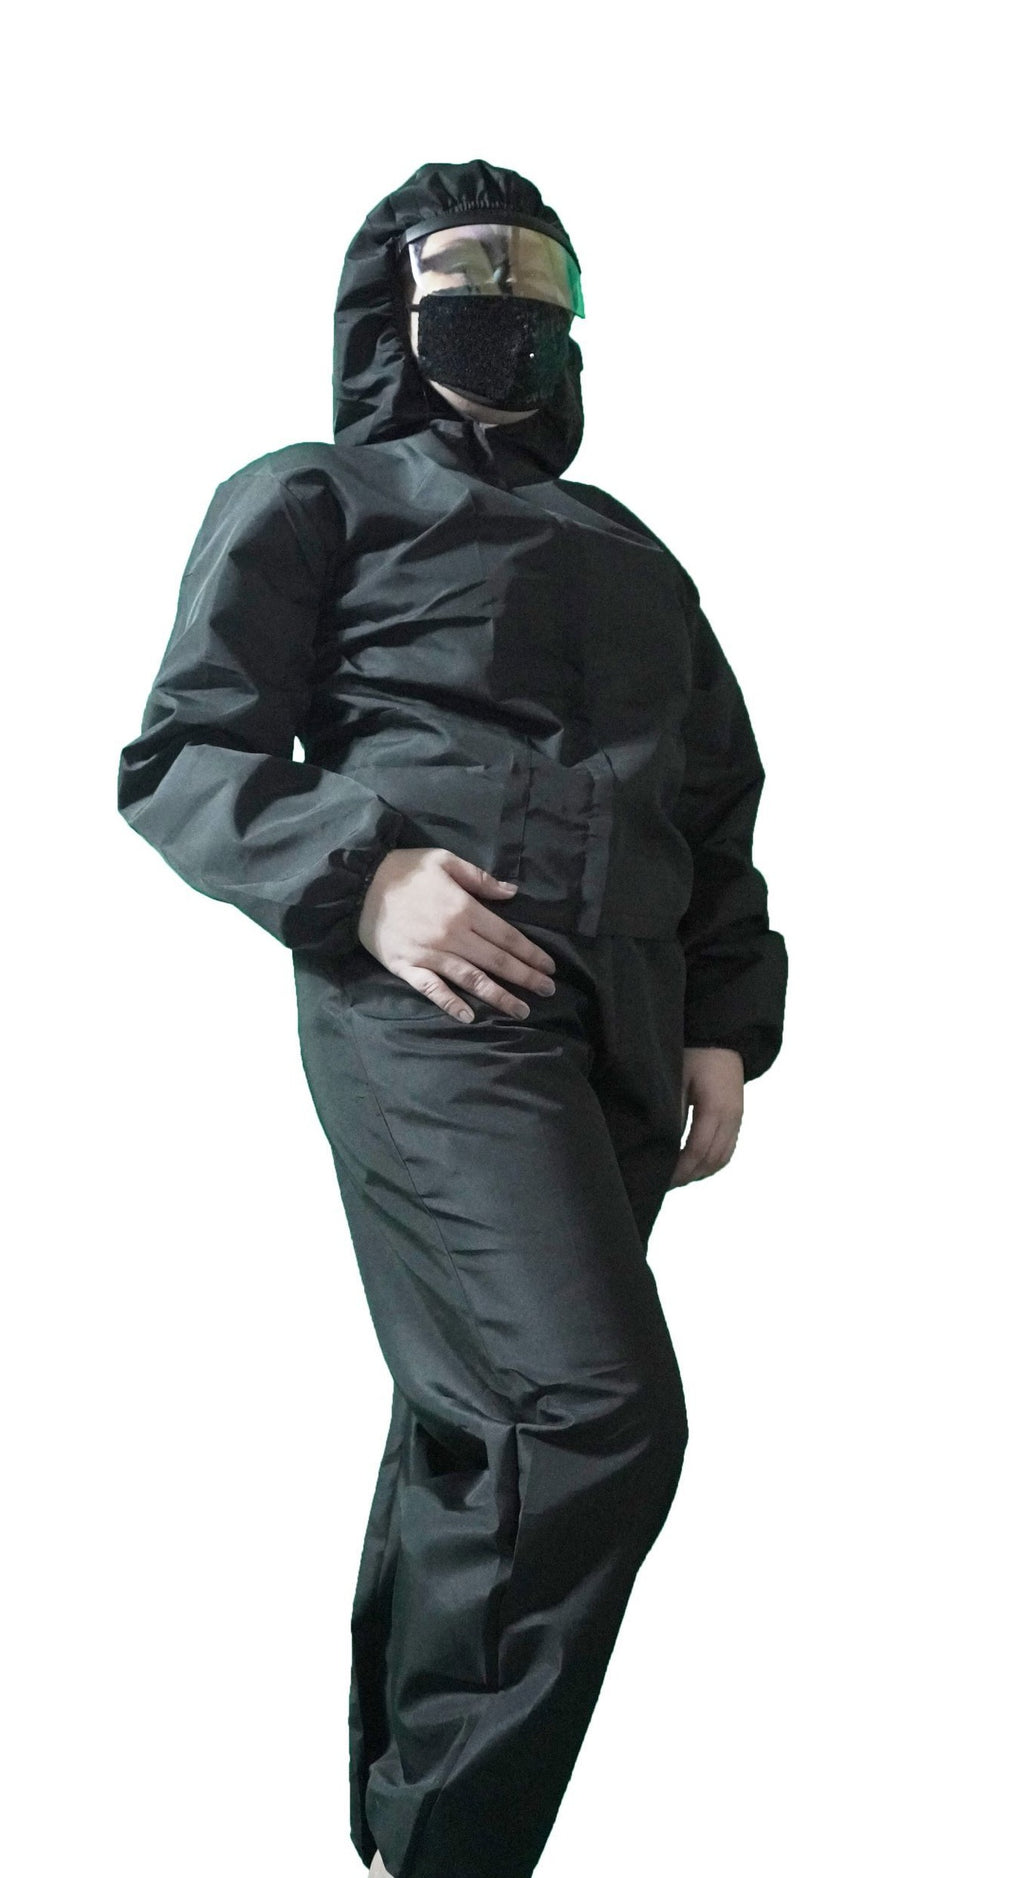 Microfiber Black PPE (Personal Protective Equipment) Suit